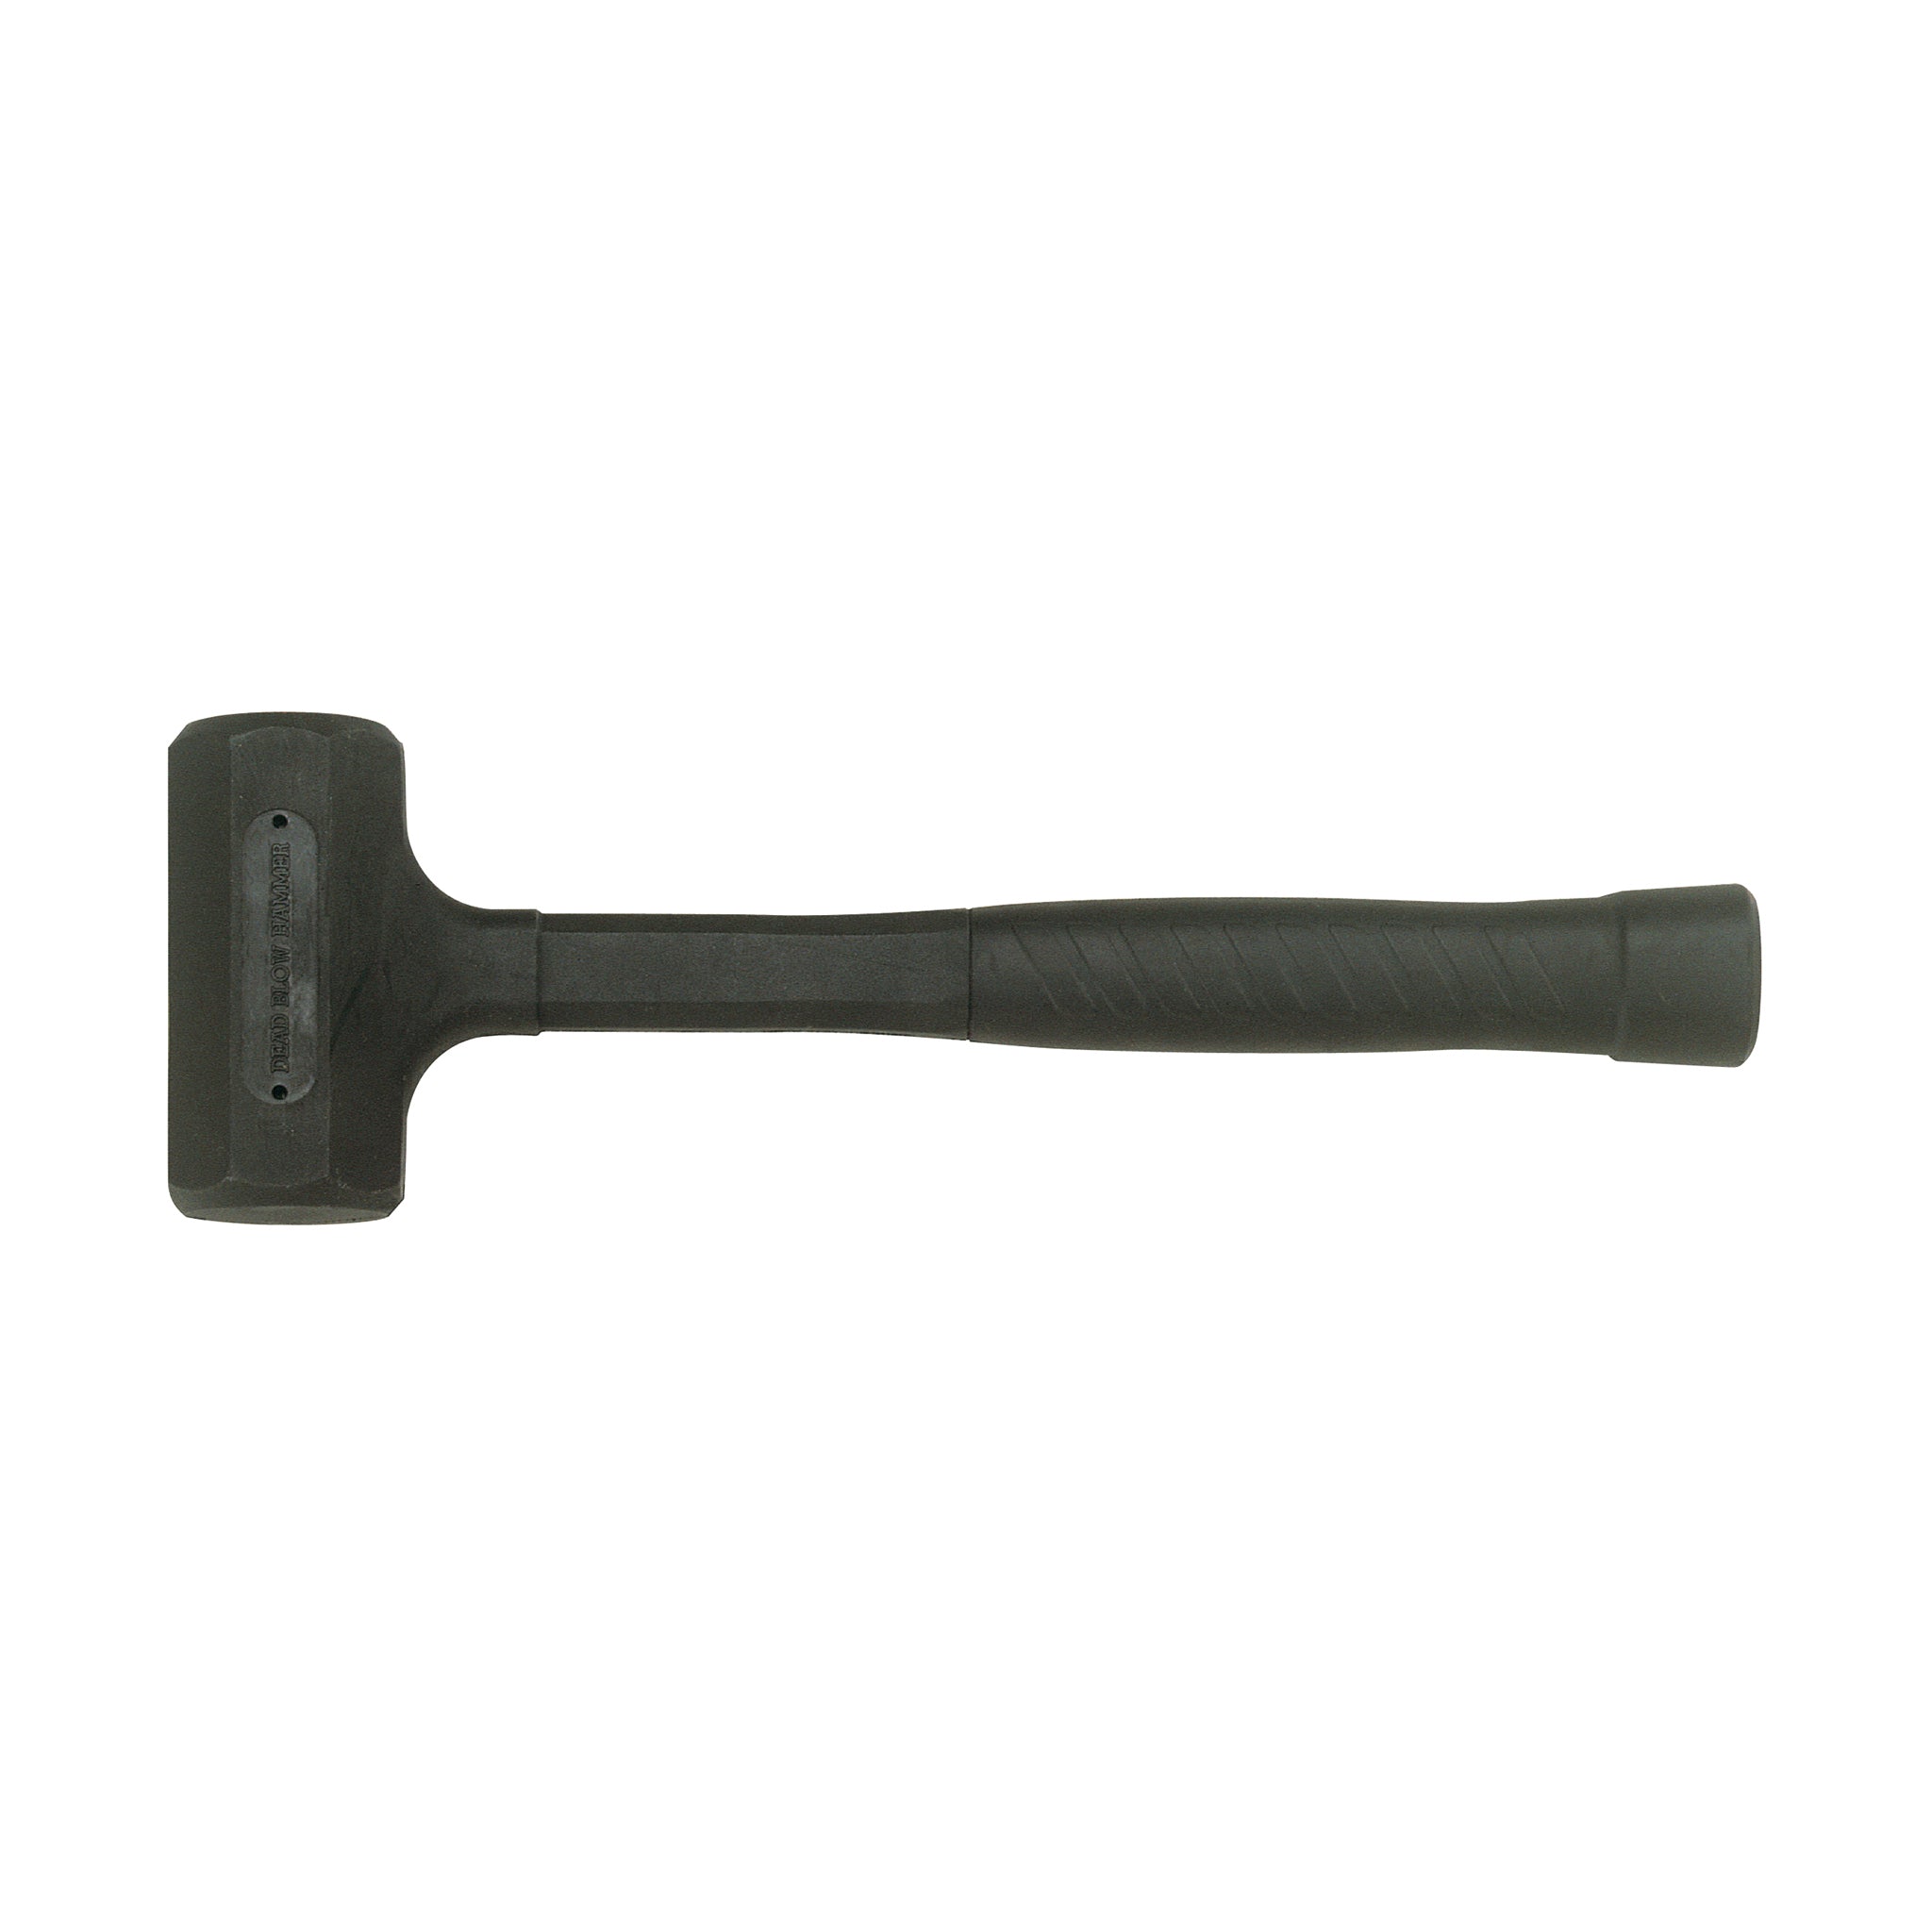 Teng Tools 5 Piece Body Working Hammer Set - TTPSAD